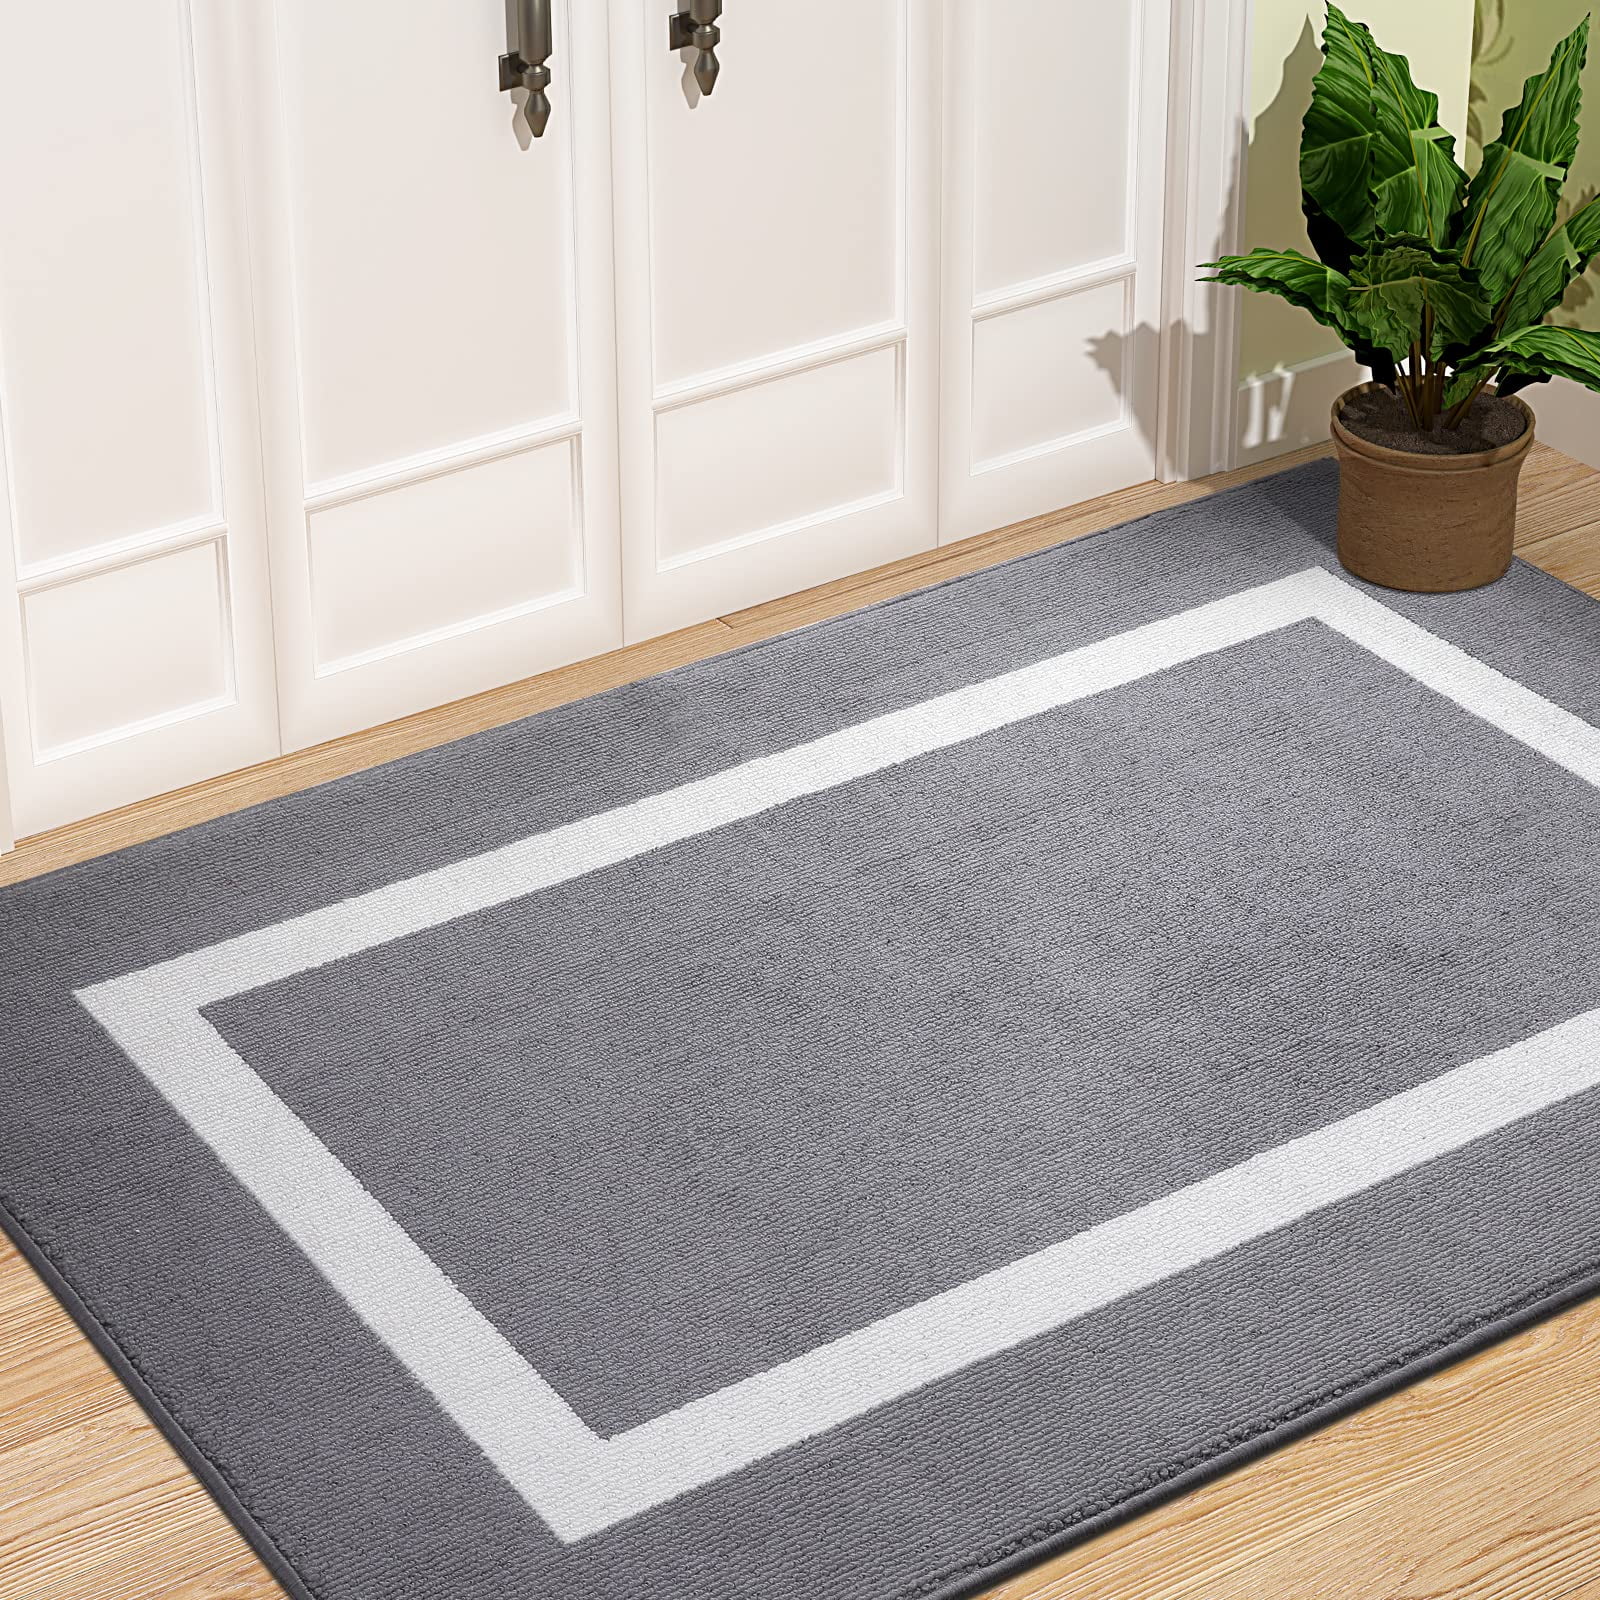 OLANLY Indoor Door Mat, 32x20, Non-Slip Absorbent Resist Dirt Entrance Mat,  Washable Low-Profile Inside Entry Doormats for Entryway, Grey